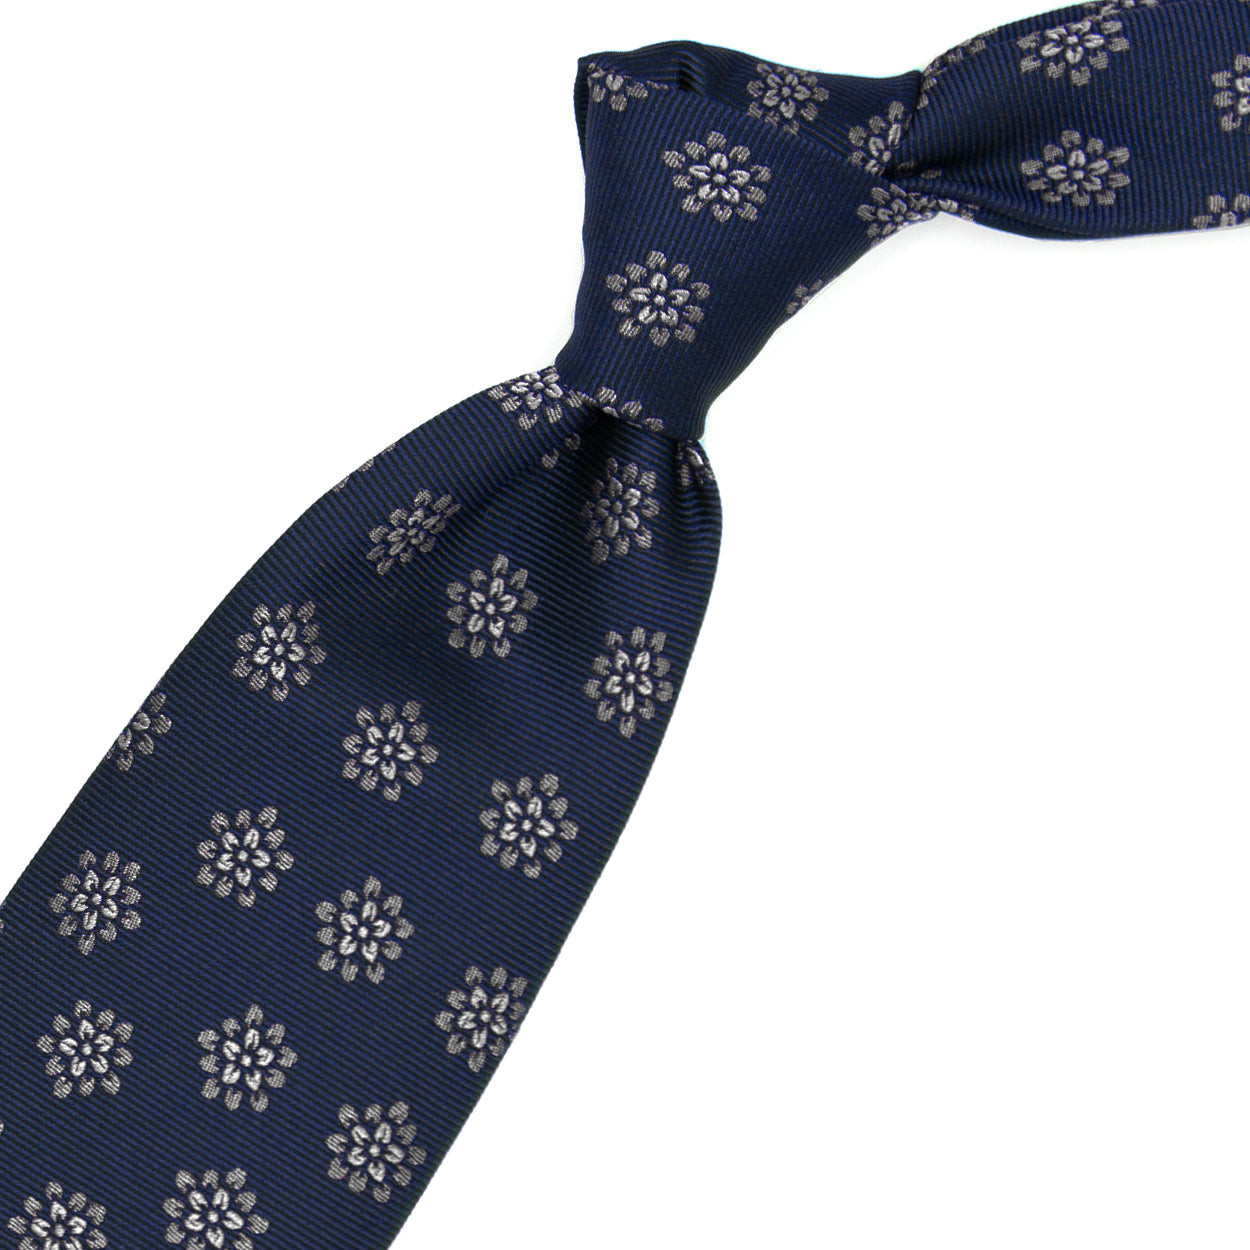 Blue tie with grey flowers